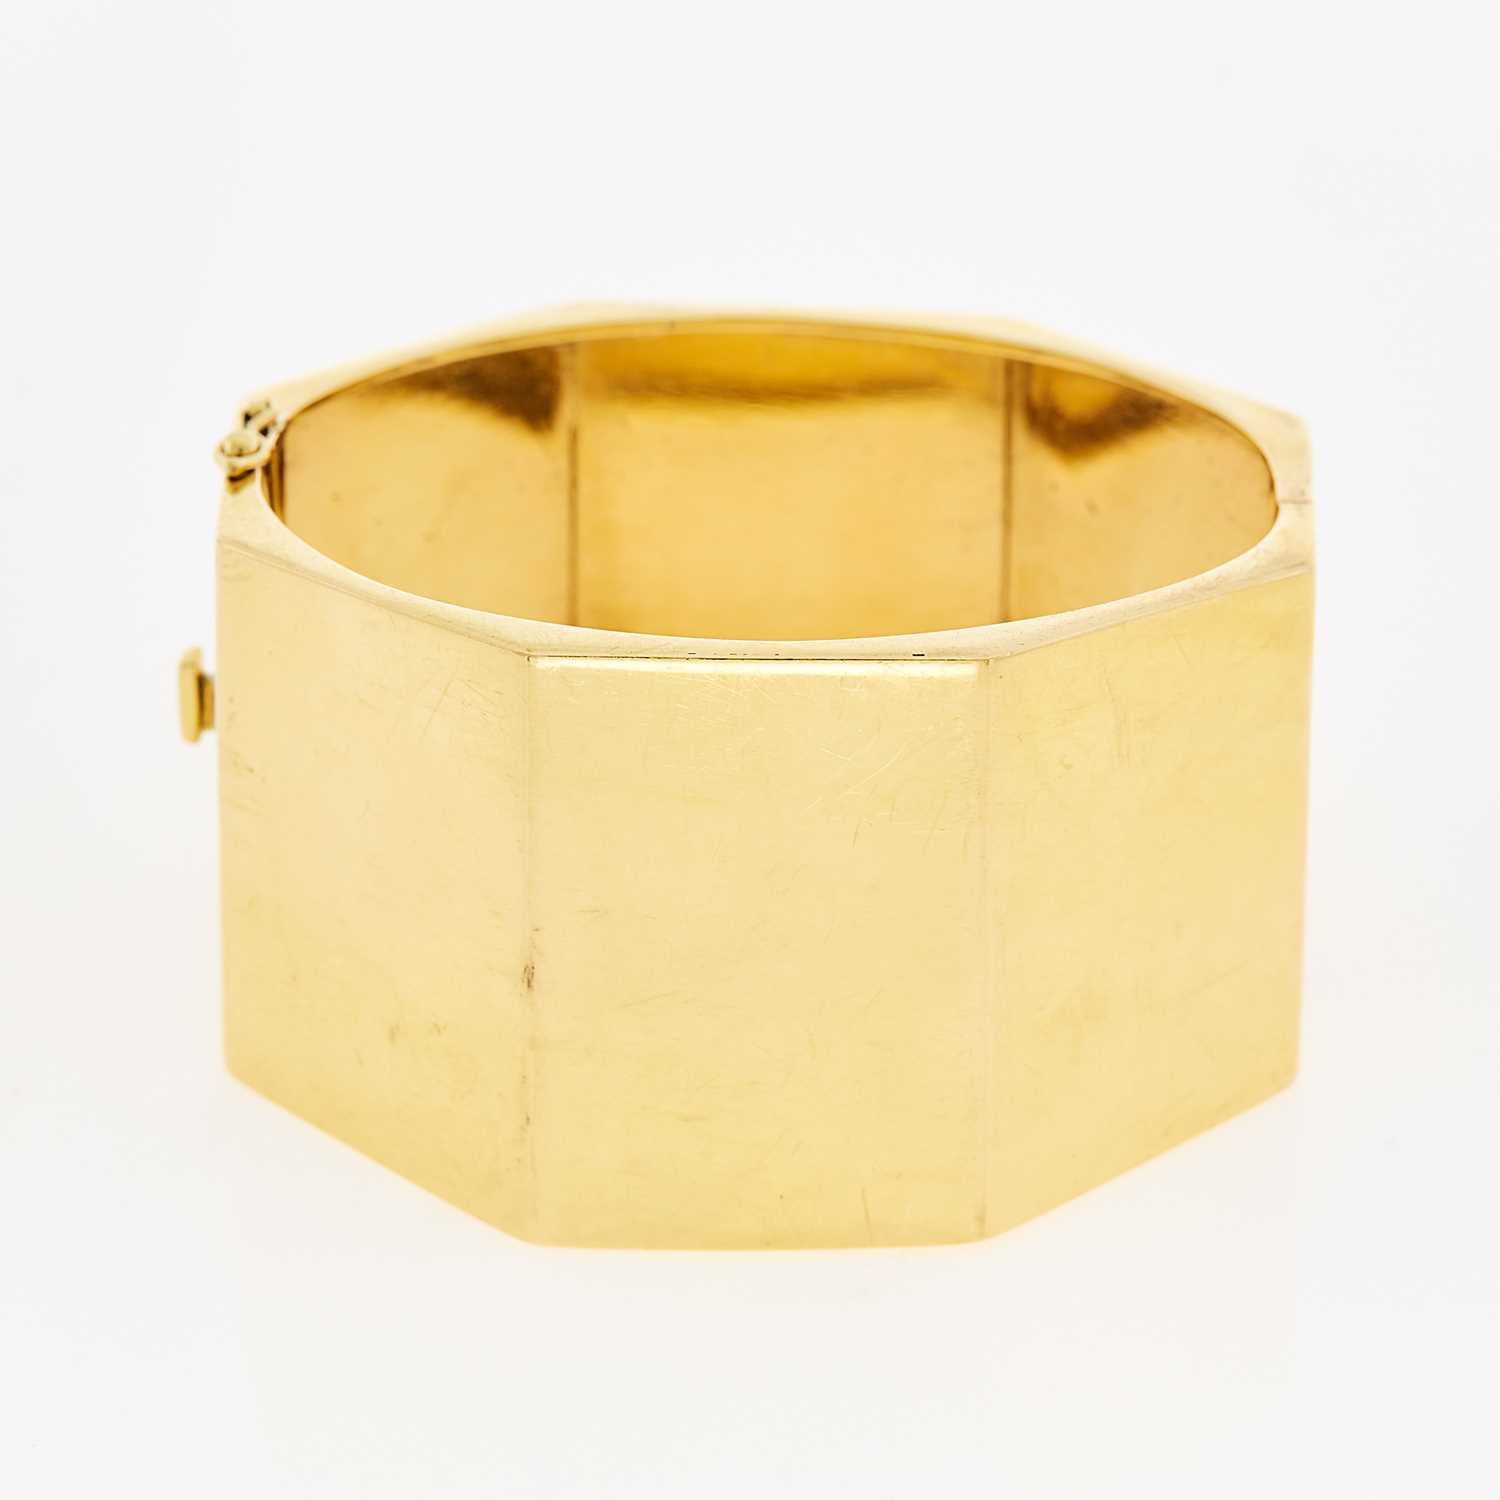 Lot 1089 - Gold Cuff Bangle Bracelet